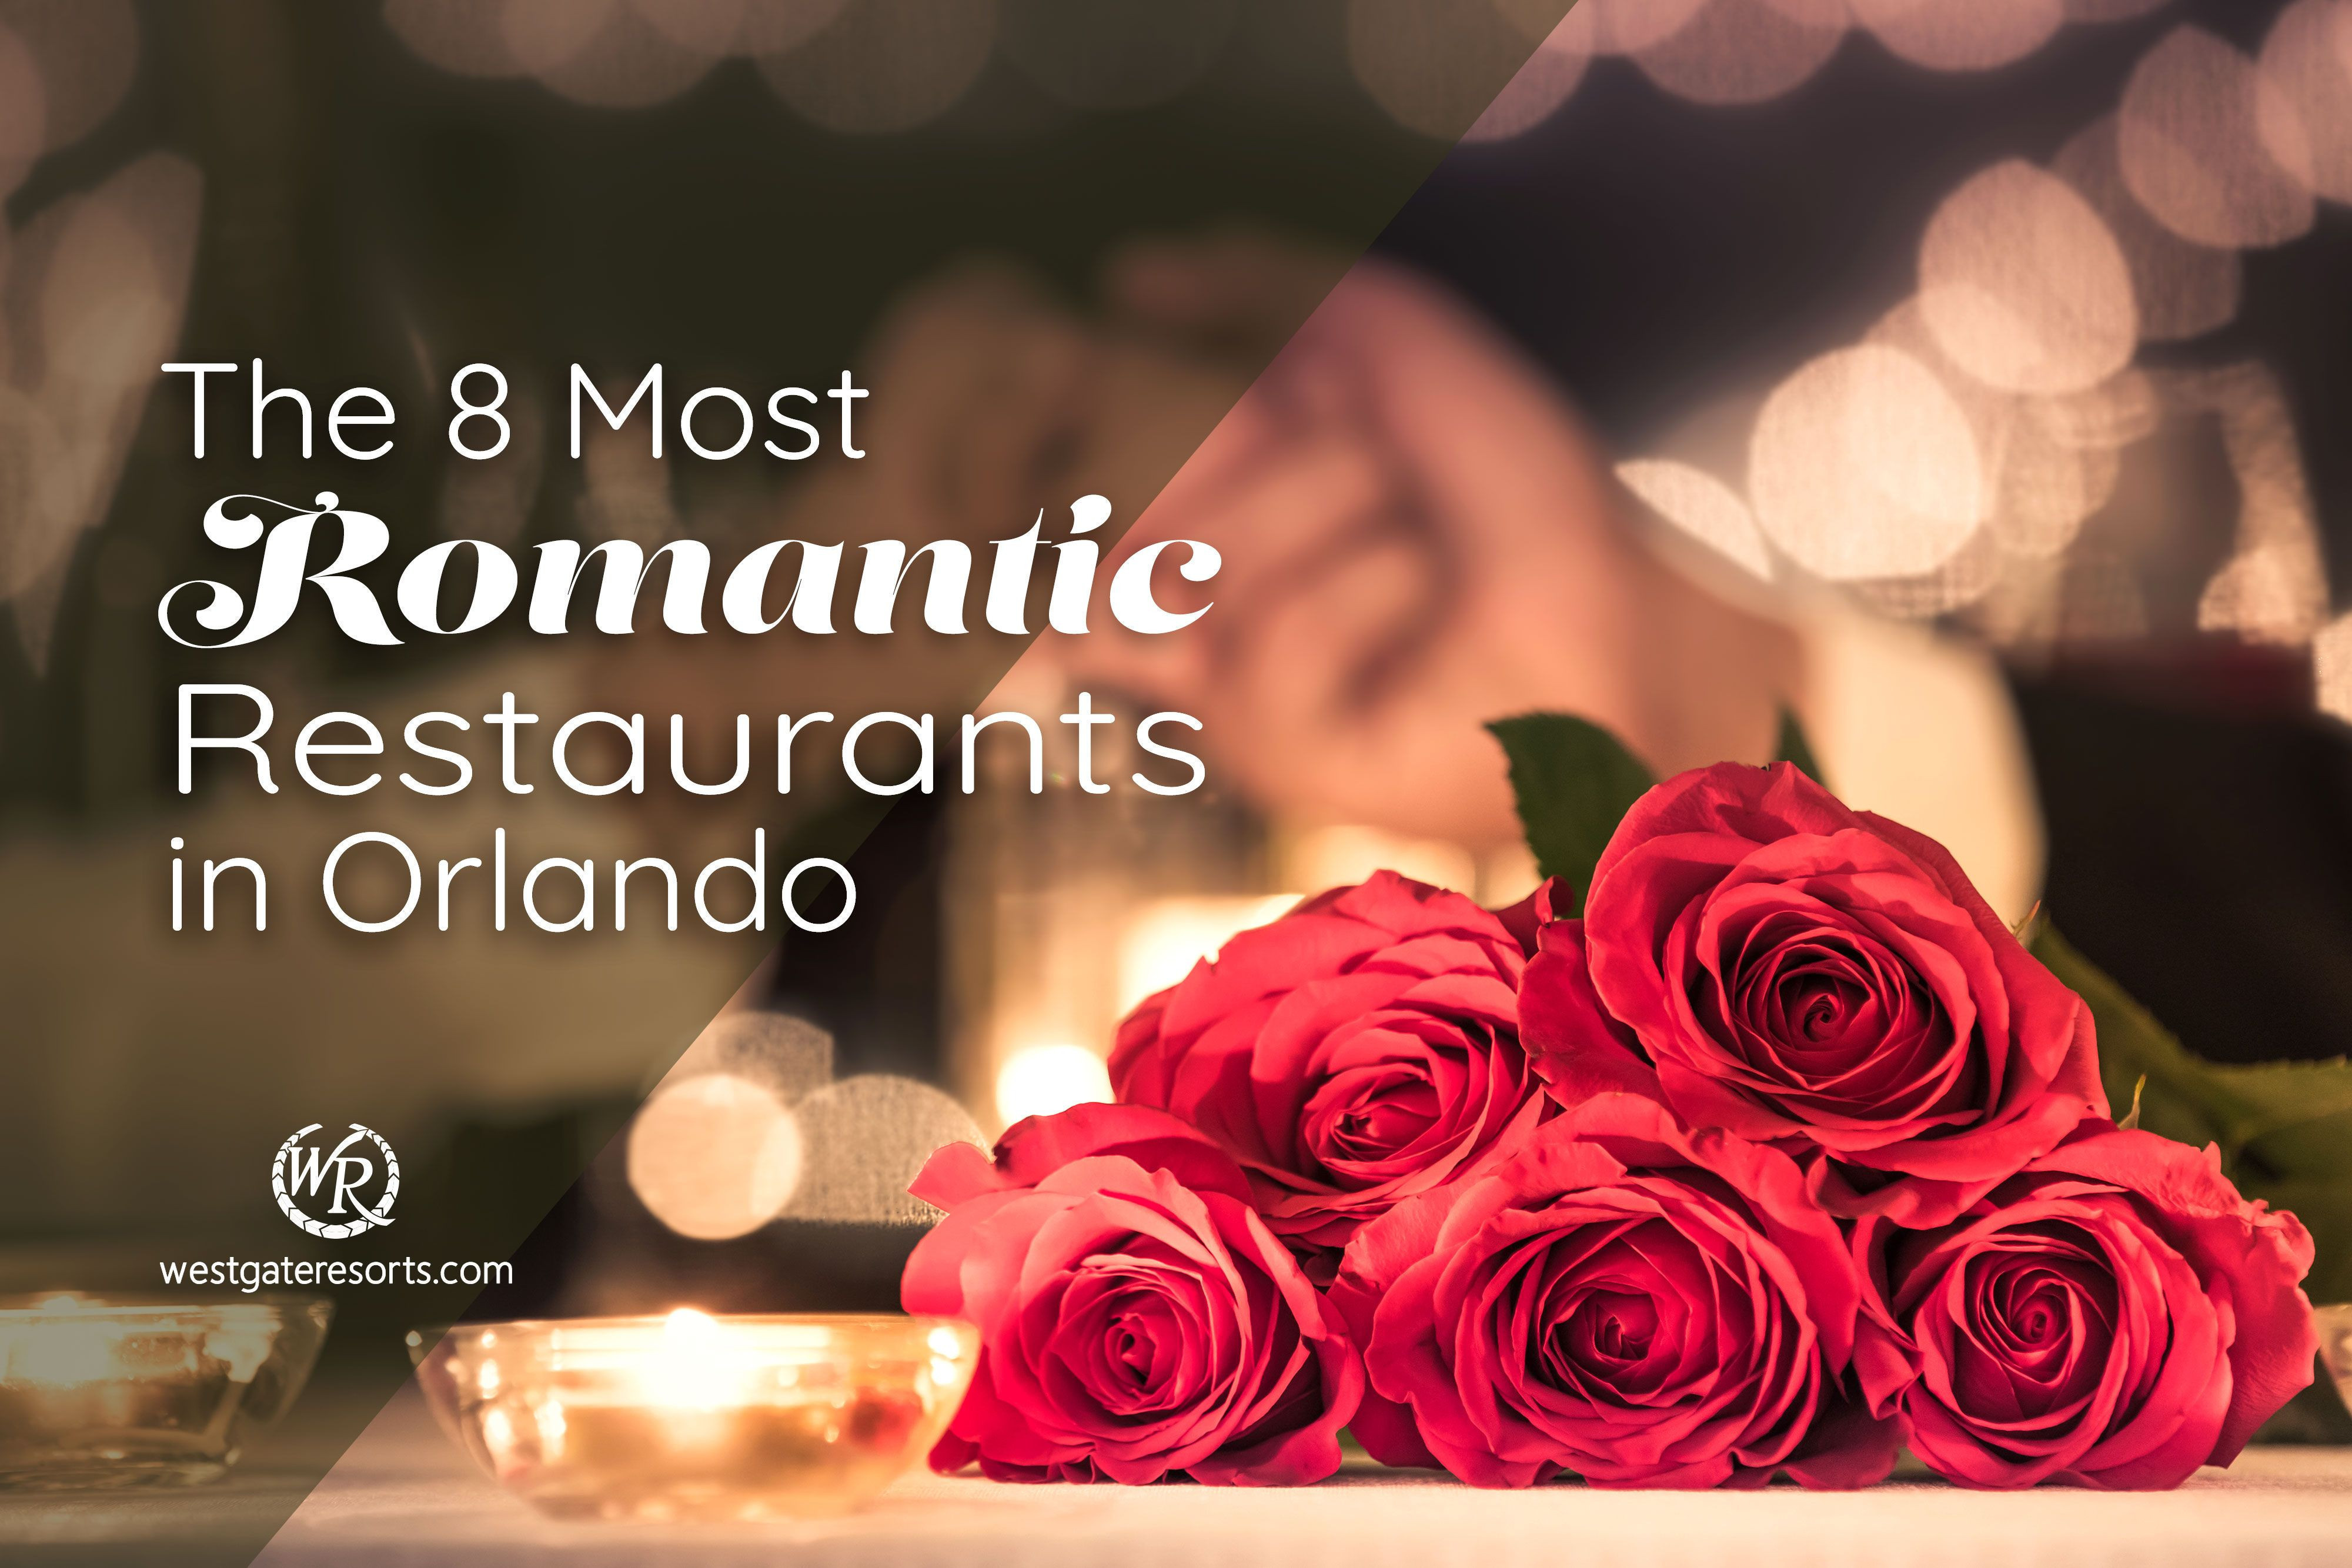 The 8 Most Romantic Restaurants in Orlando